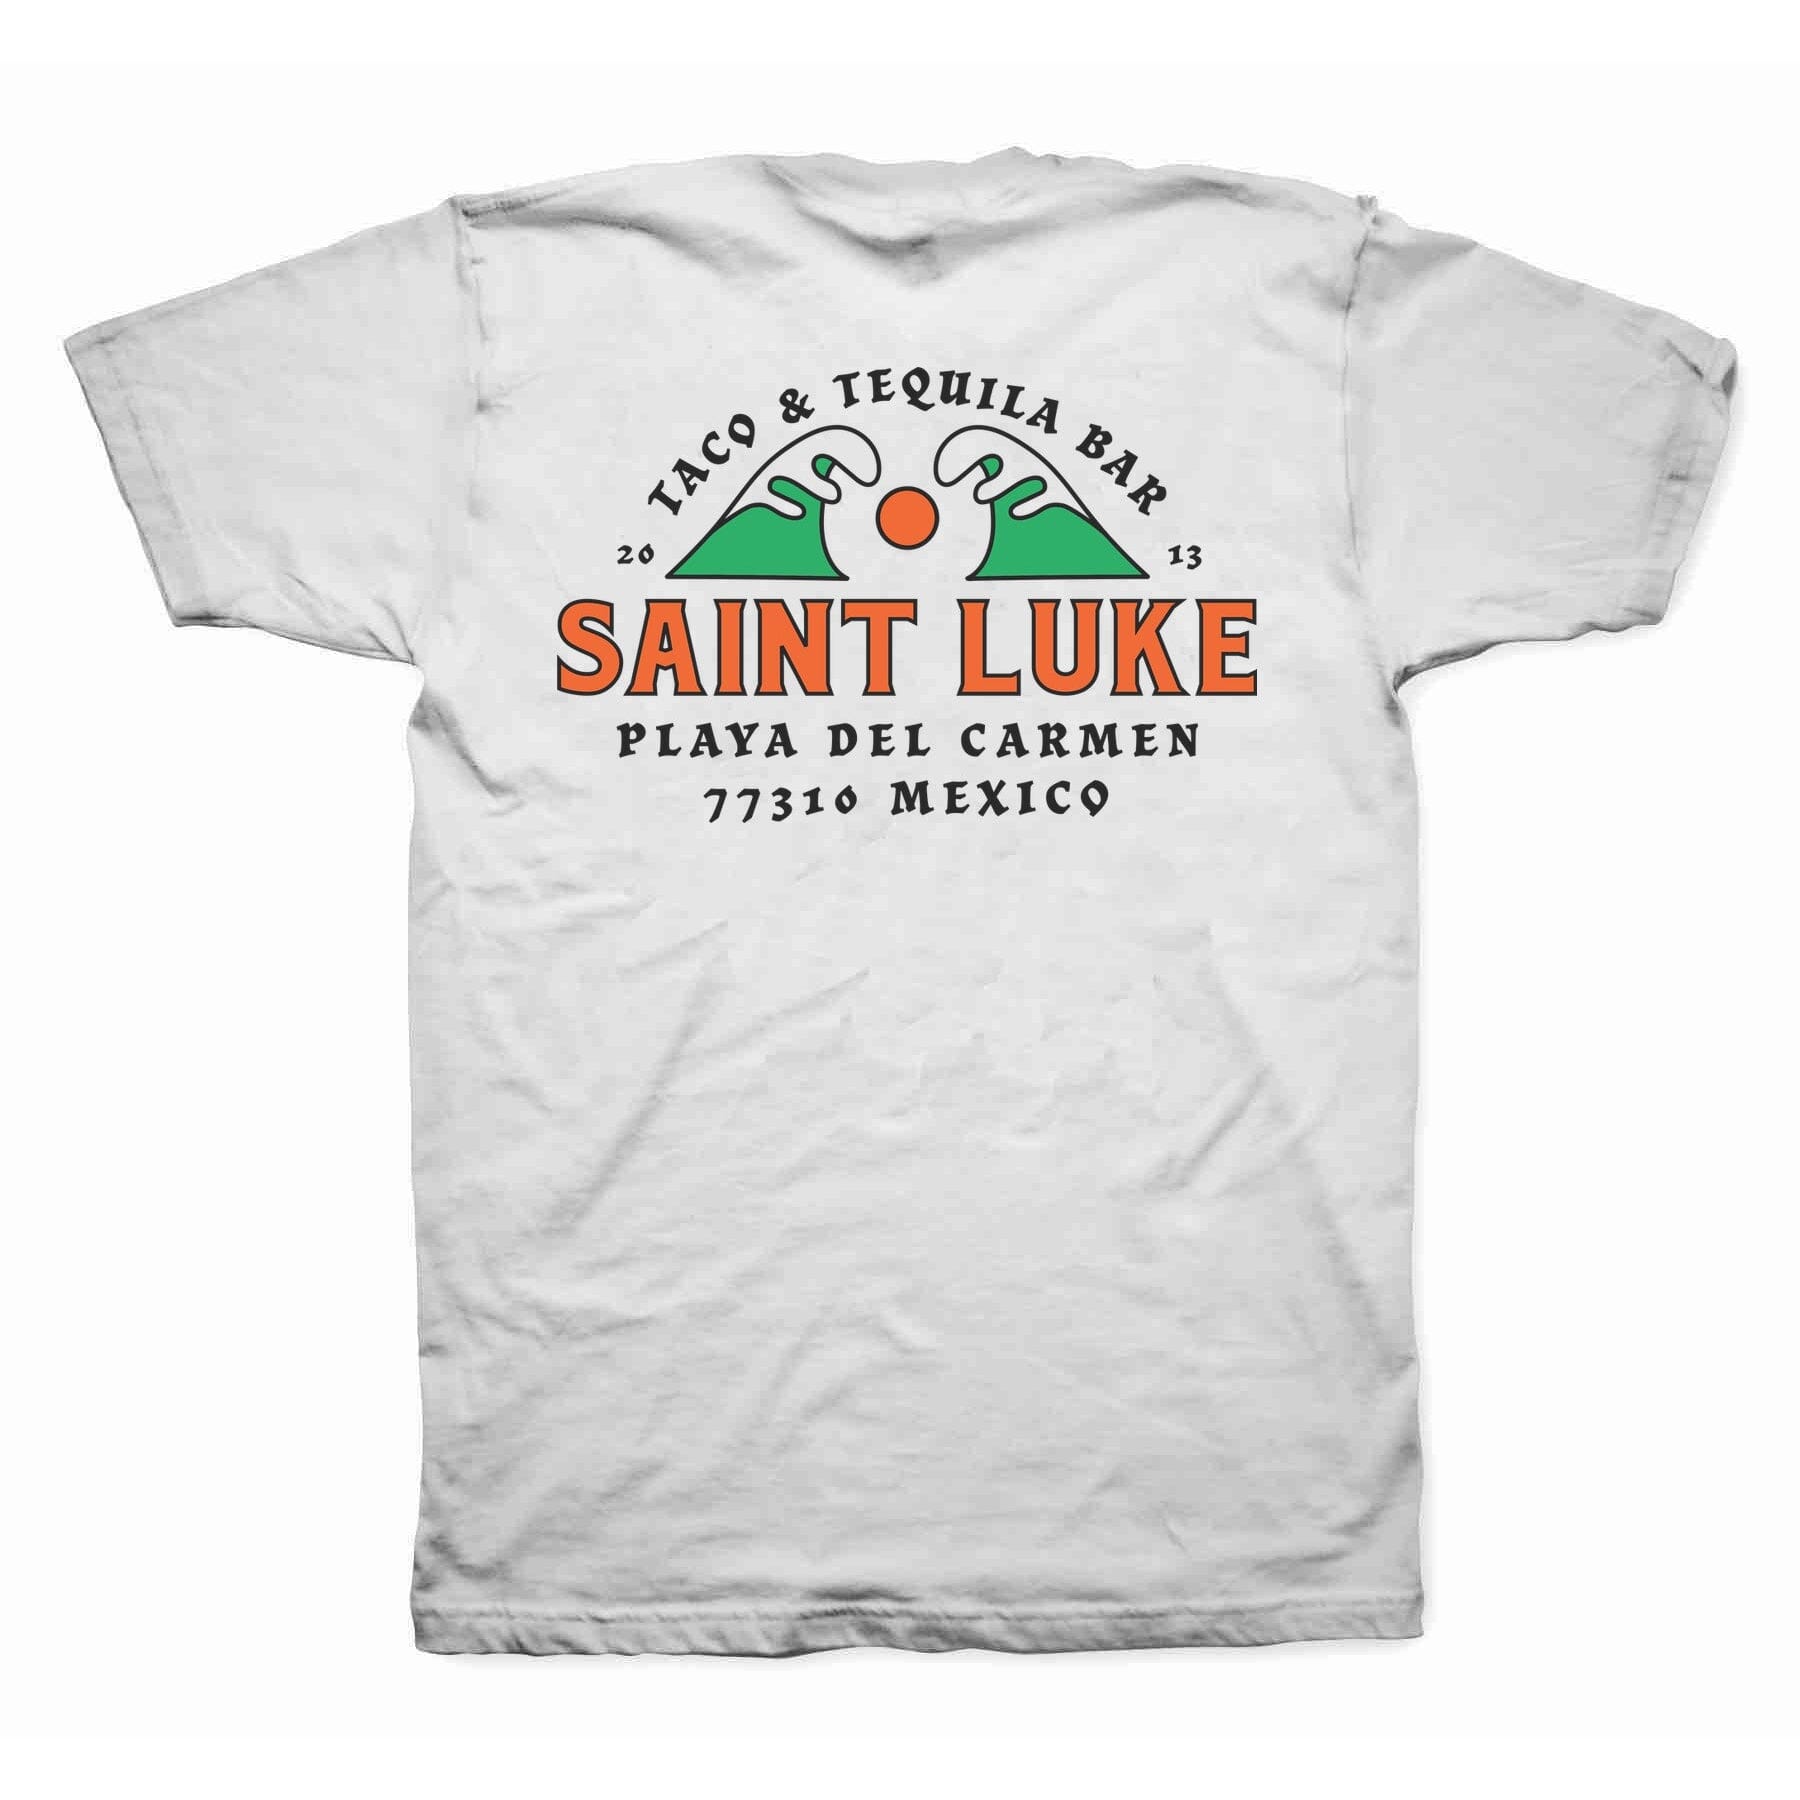 Saint Luke Tacos & Tequila T-shirt